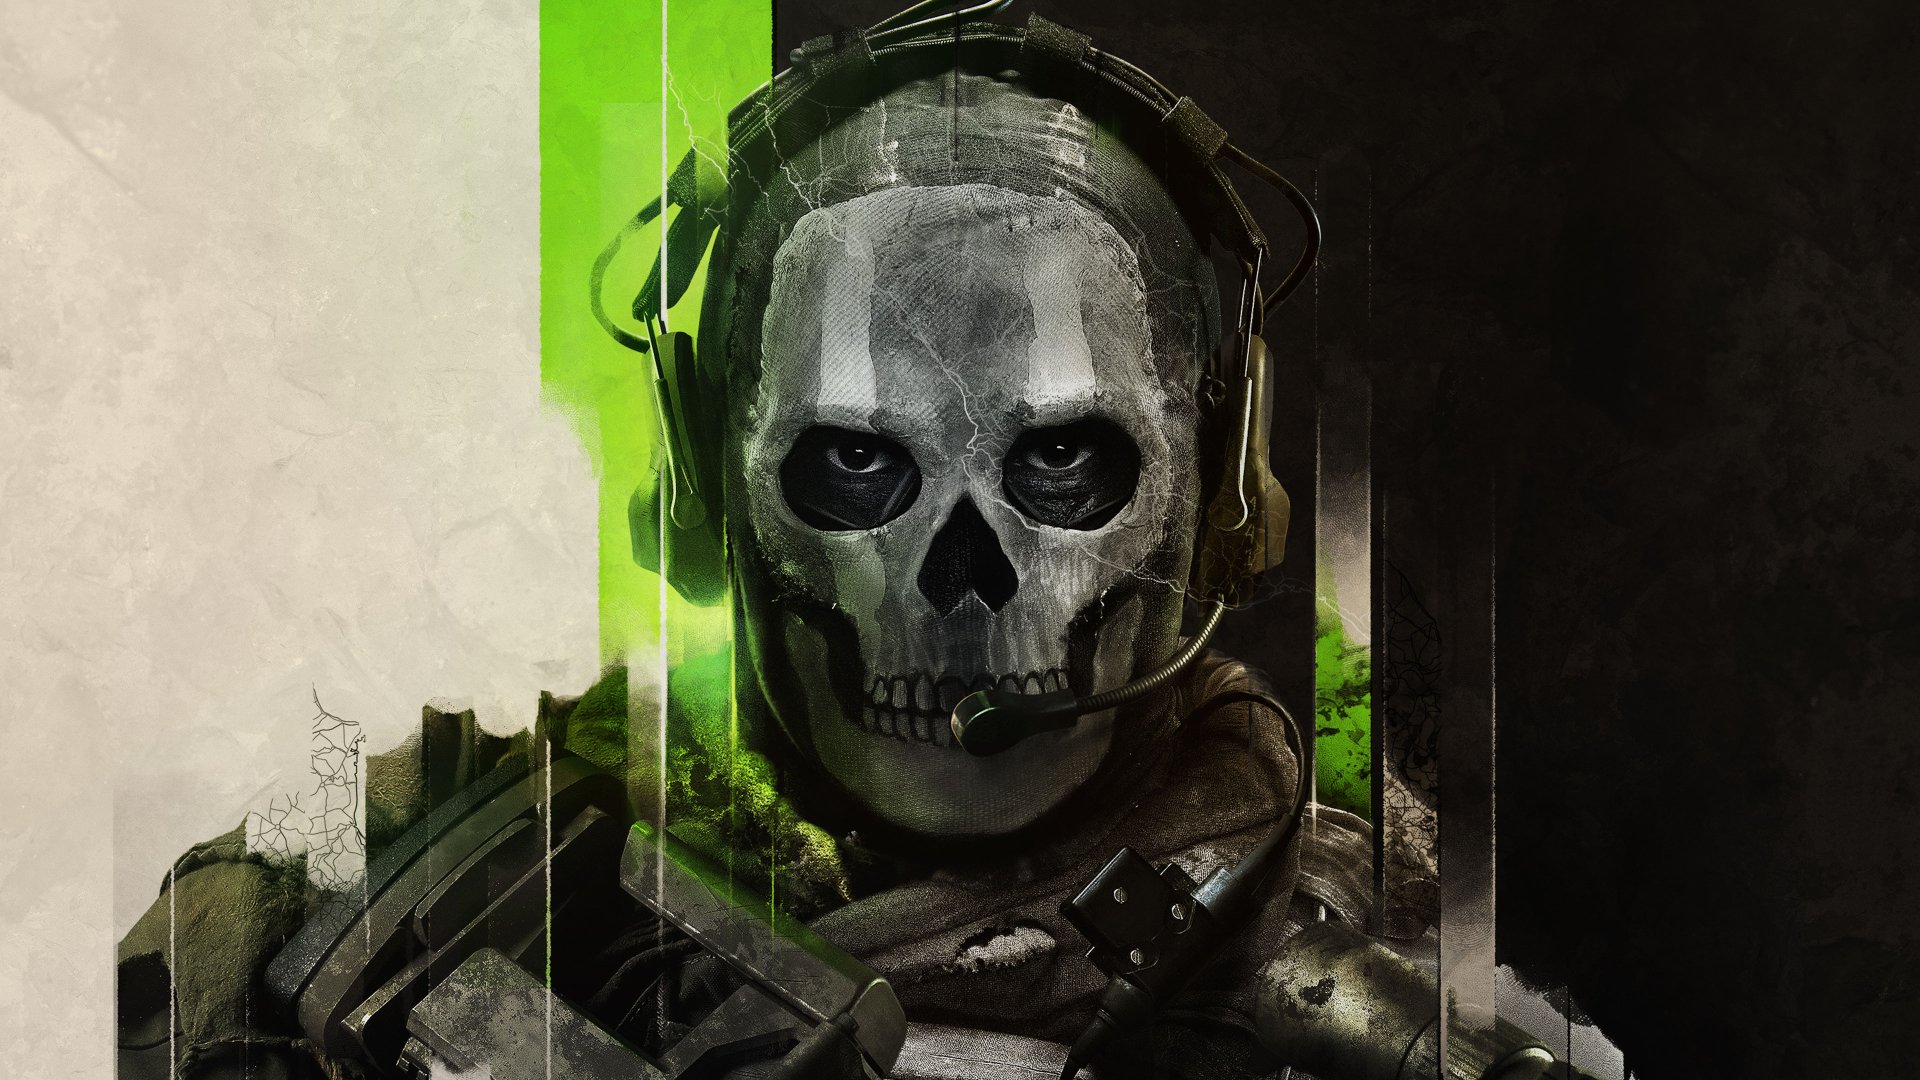 HD wallpaper: Call of Duty Ghost digital wallpaper, Call of Duty: Ghosts,  video games